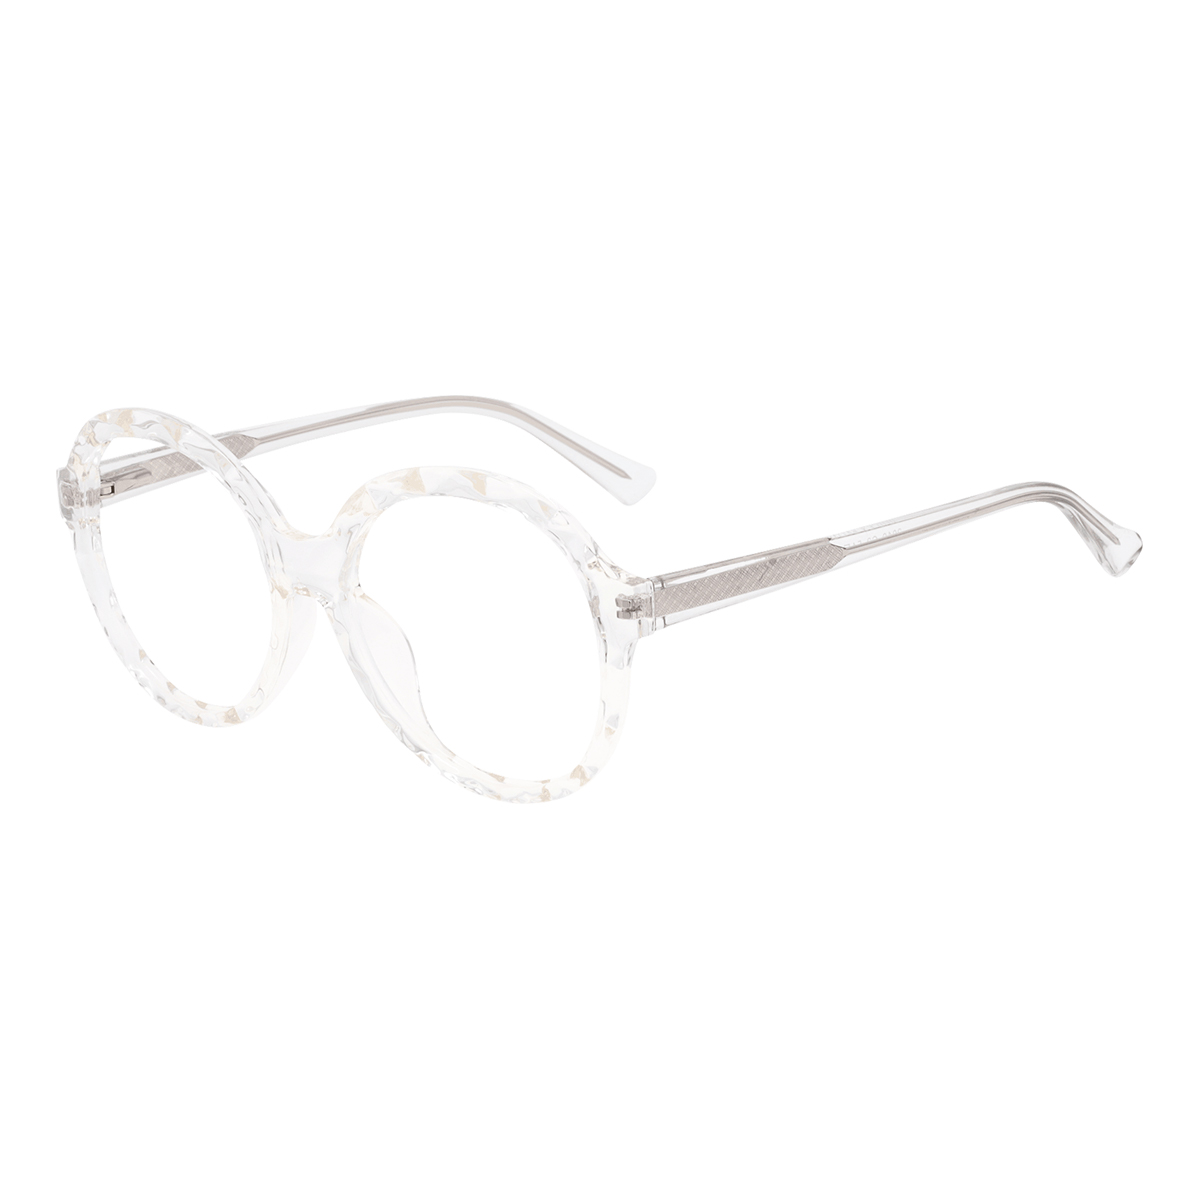 Euphrosyne - Round Transparent Reading Glasses for Women